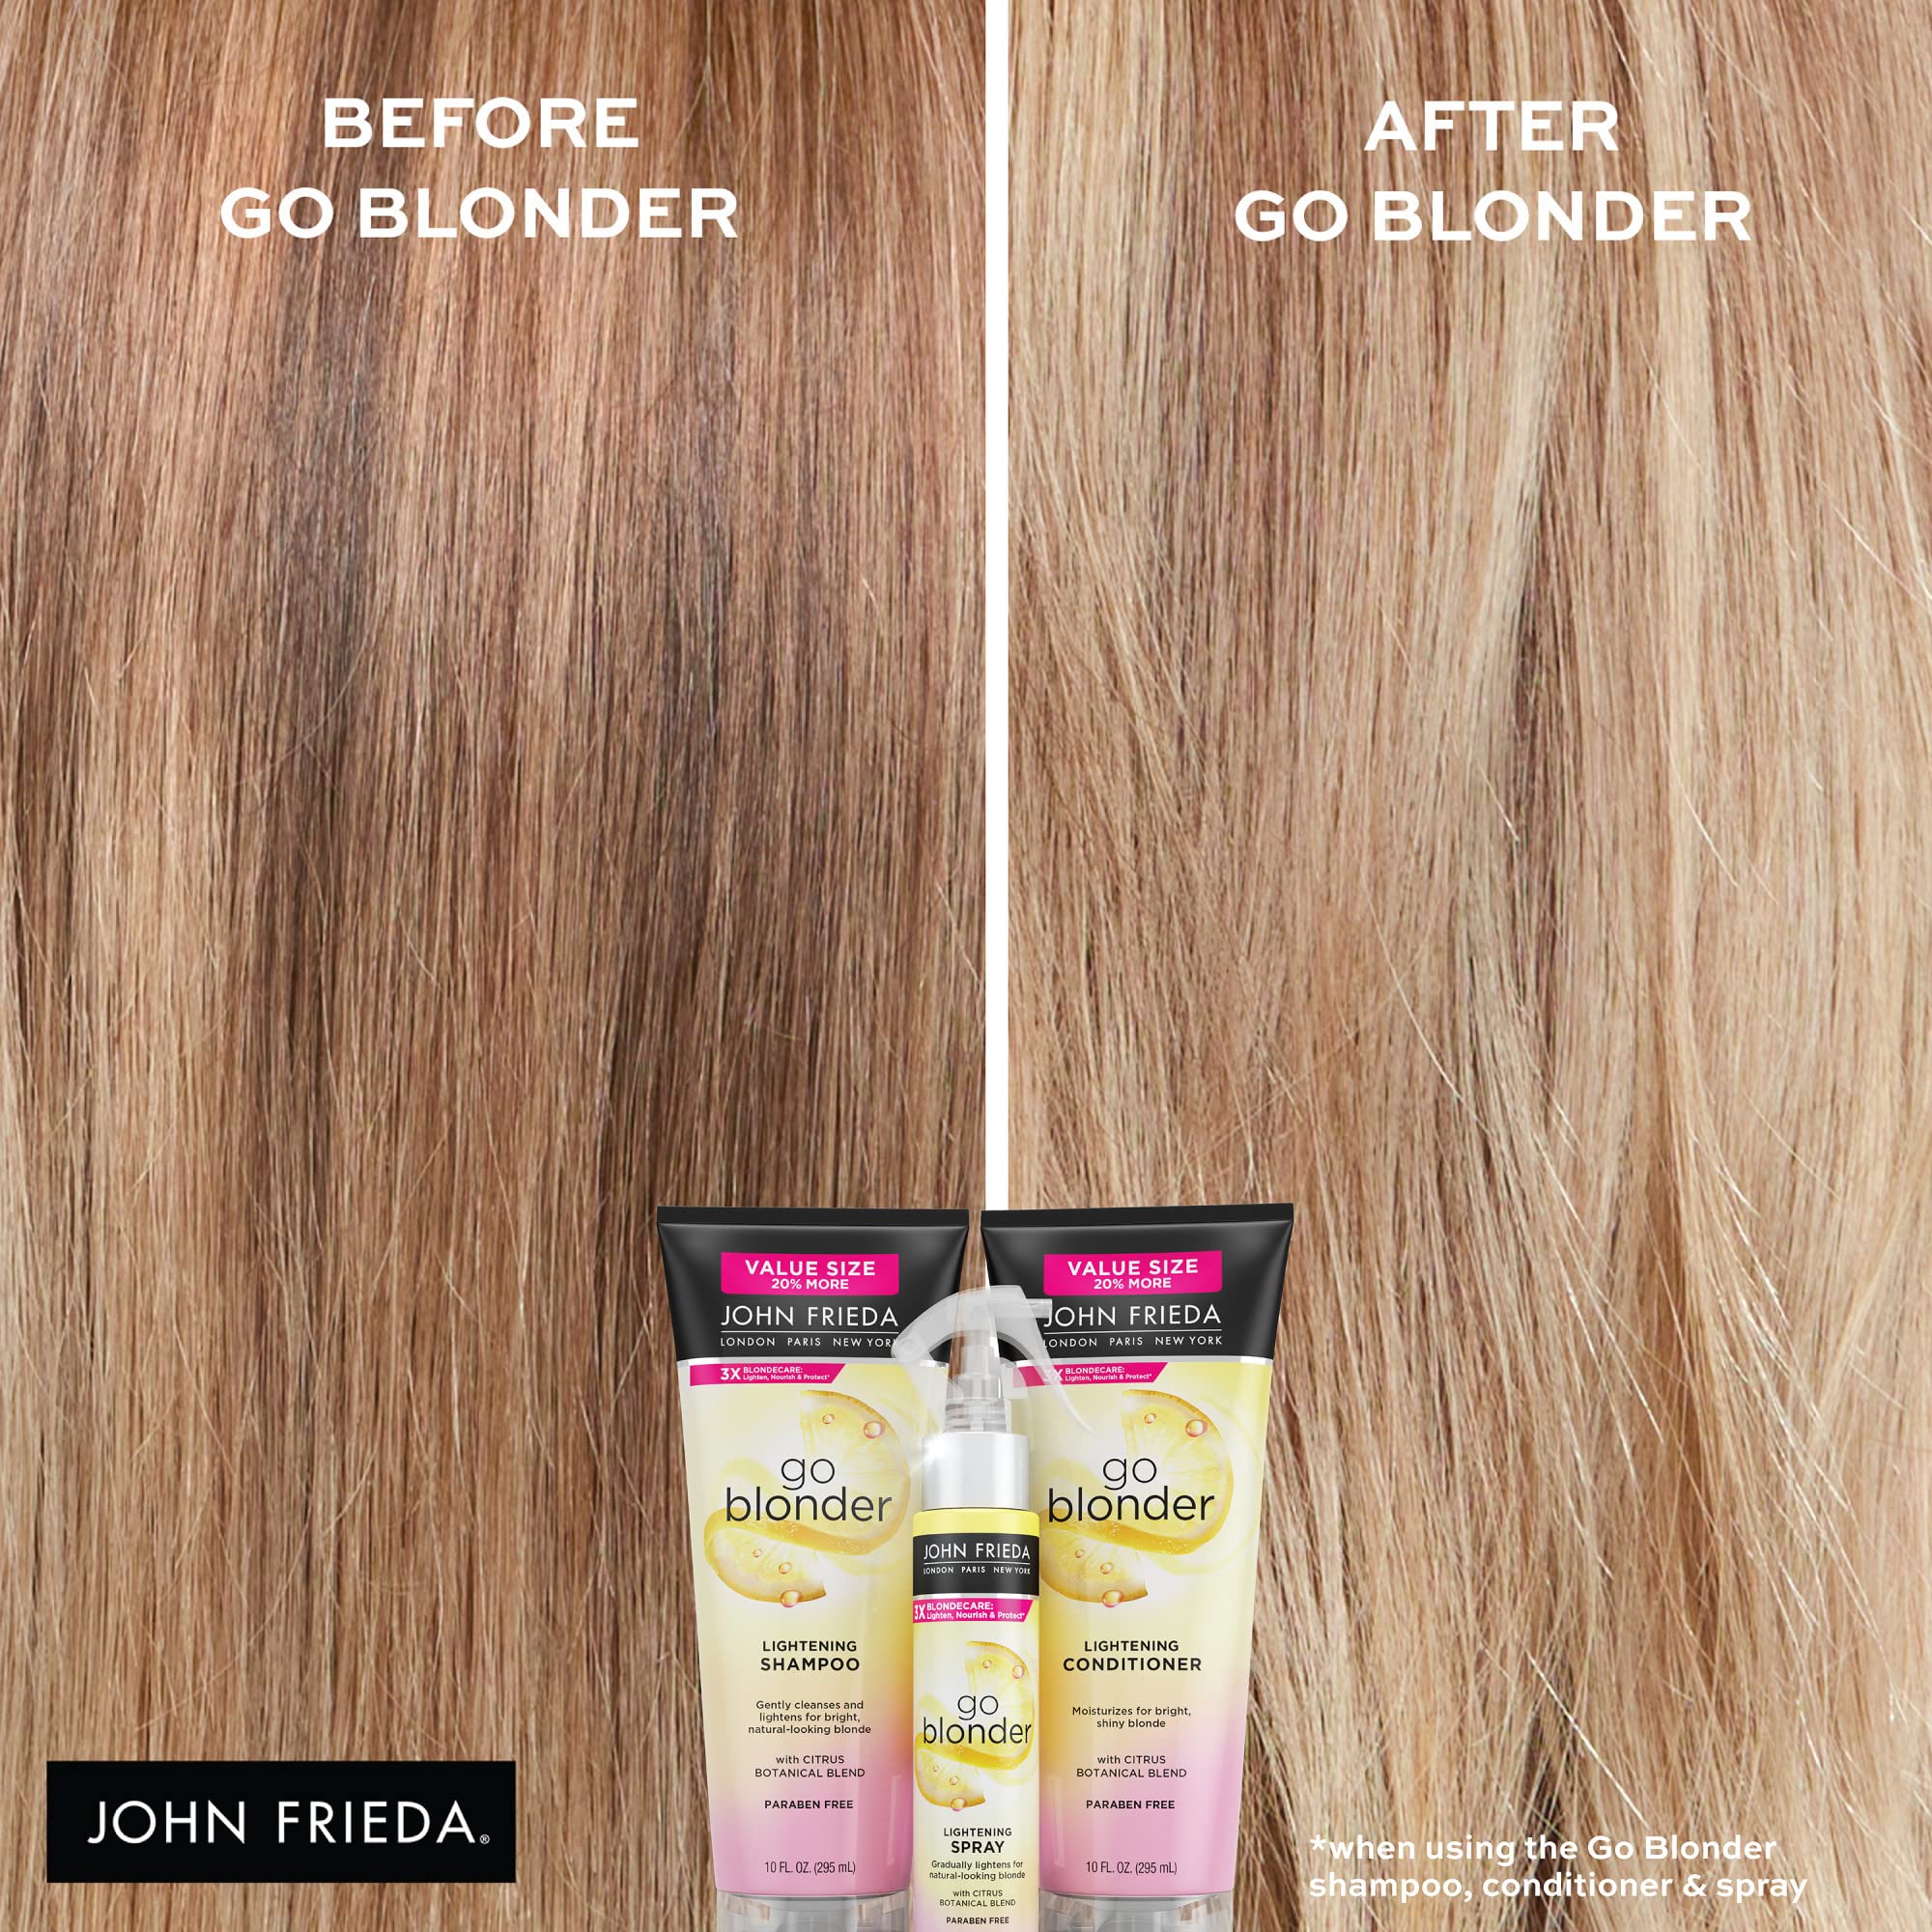 John Frieda Sheer Blonde Go Blonder Lightening Spray, Controlled Hair Lightener to Gradually Lighten Hair, with Citrus and Chamomile BlondMend Technology, 3.5 Ounce